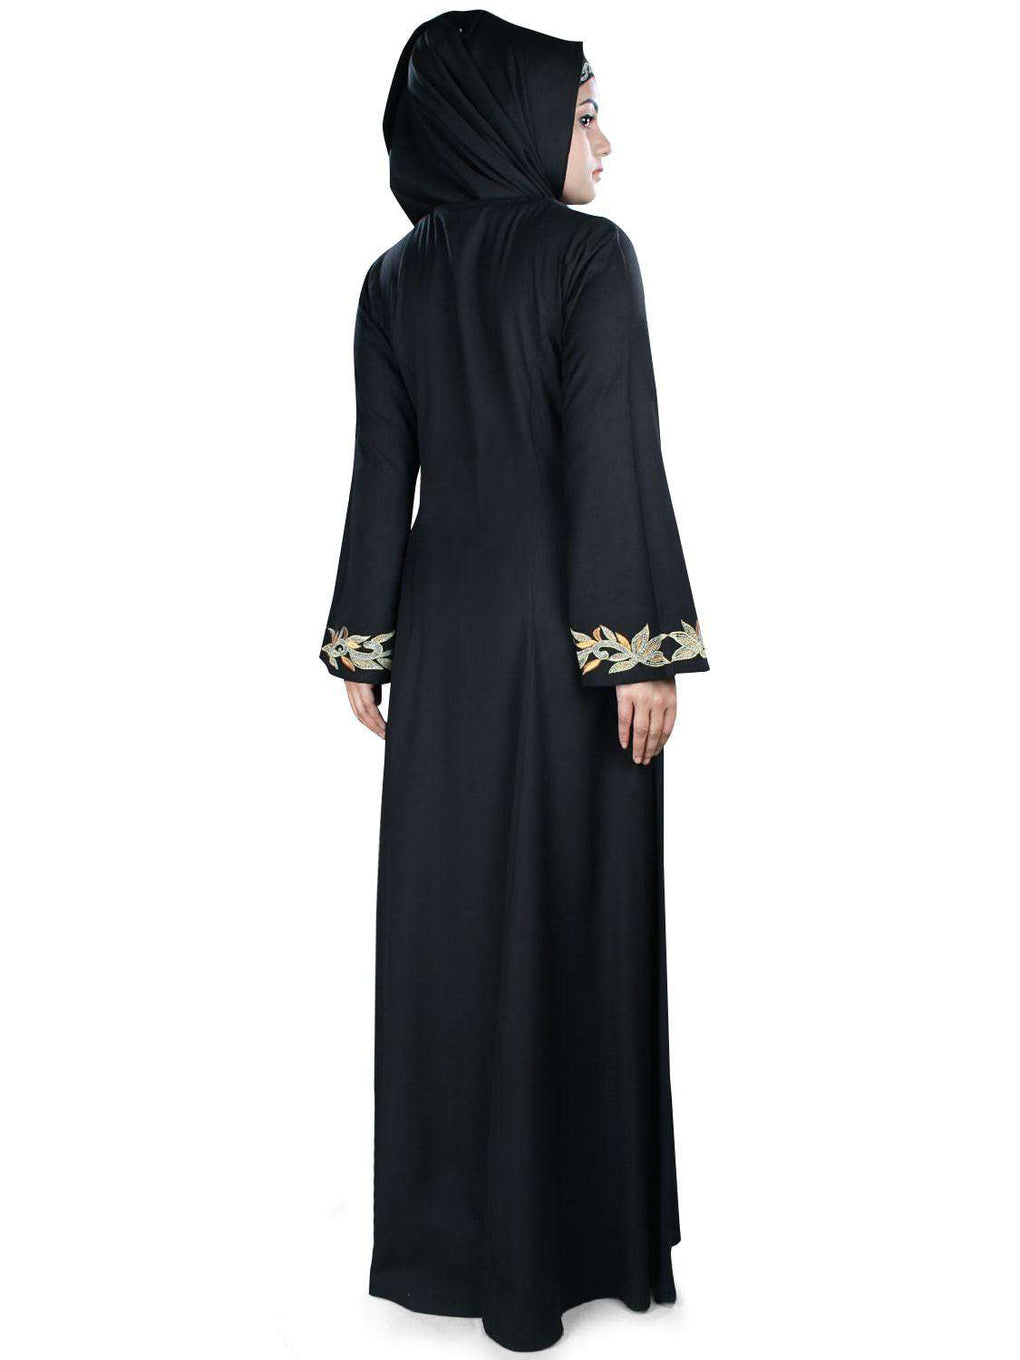 Buy Hifza Rayon Embroidered Black Abaya Online – MyBatua.com